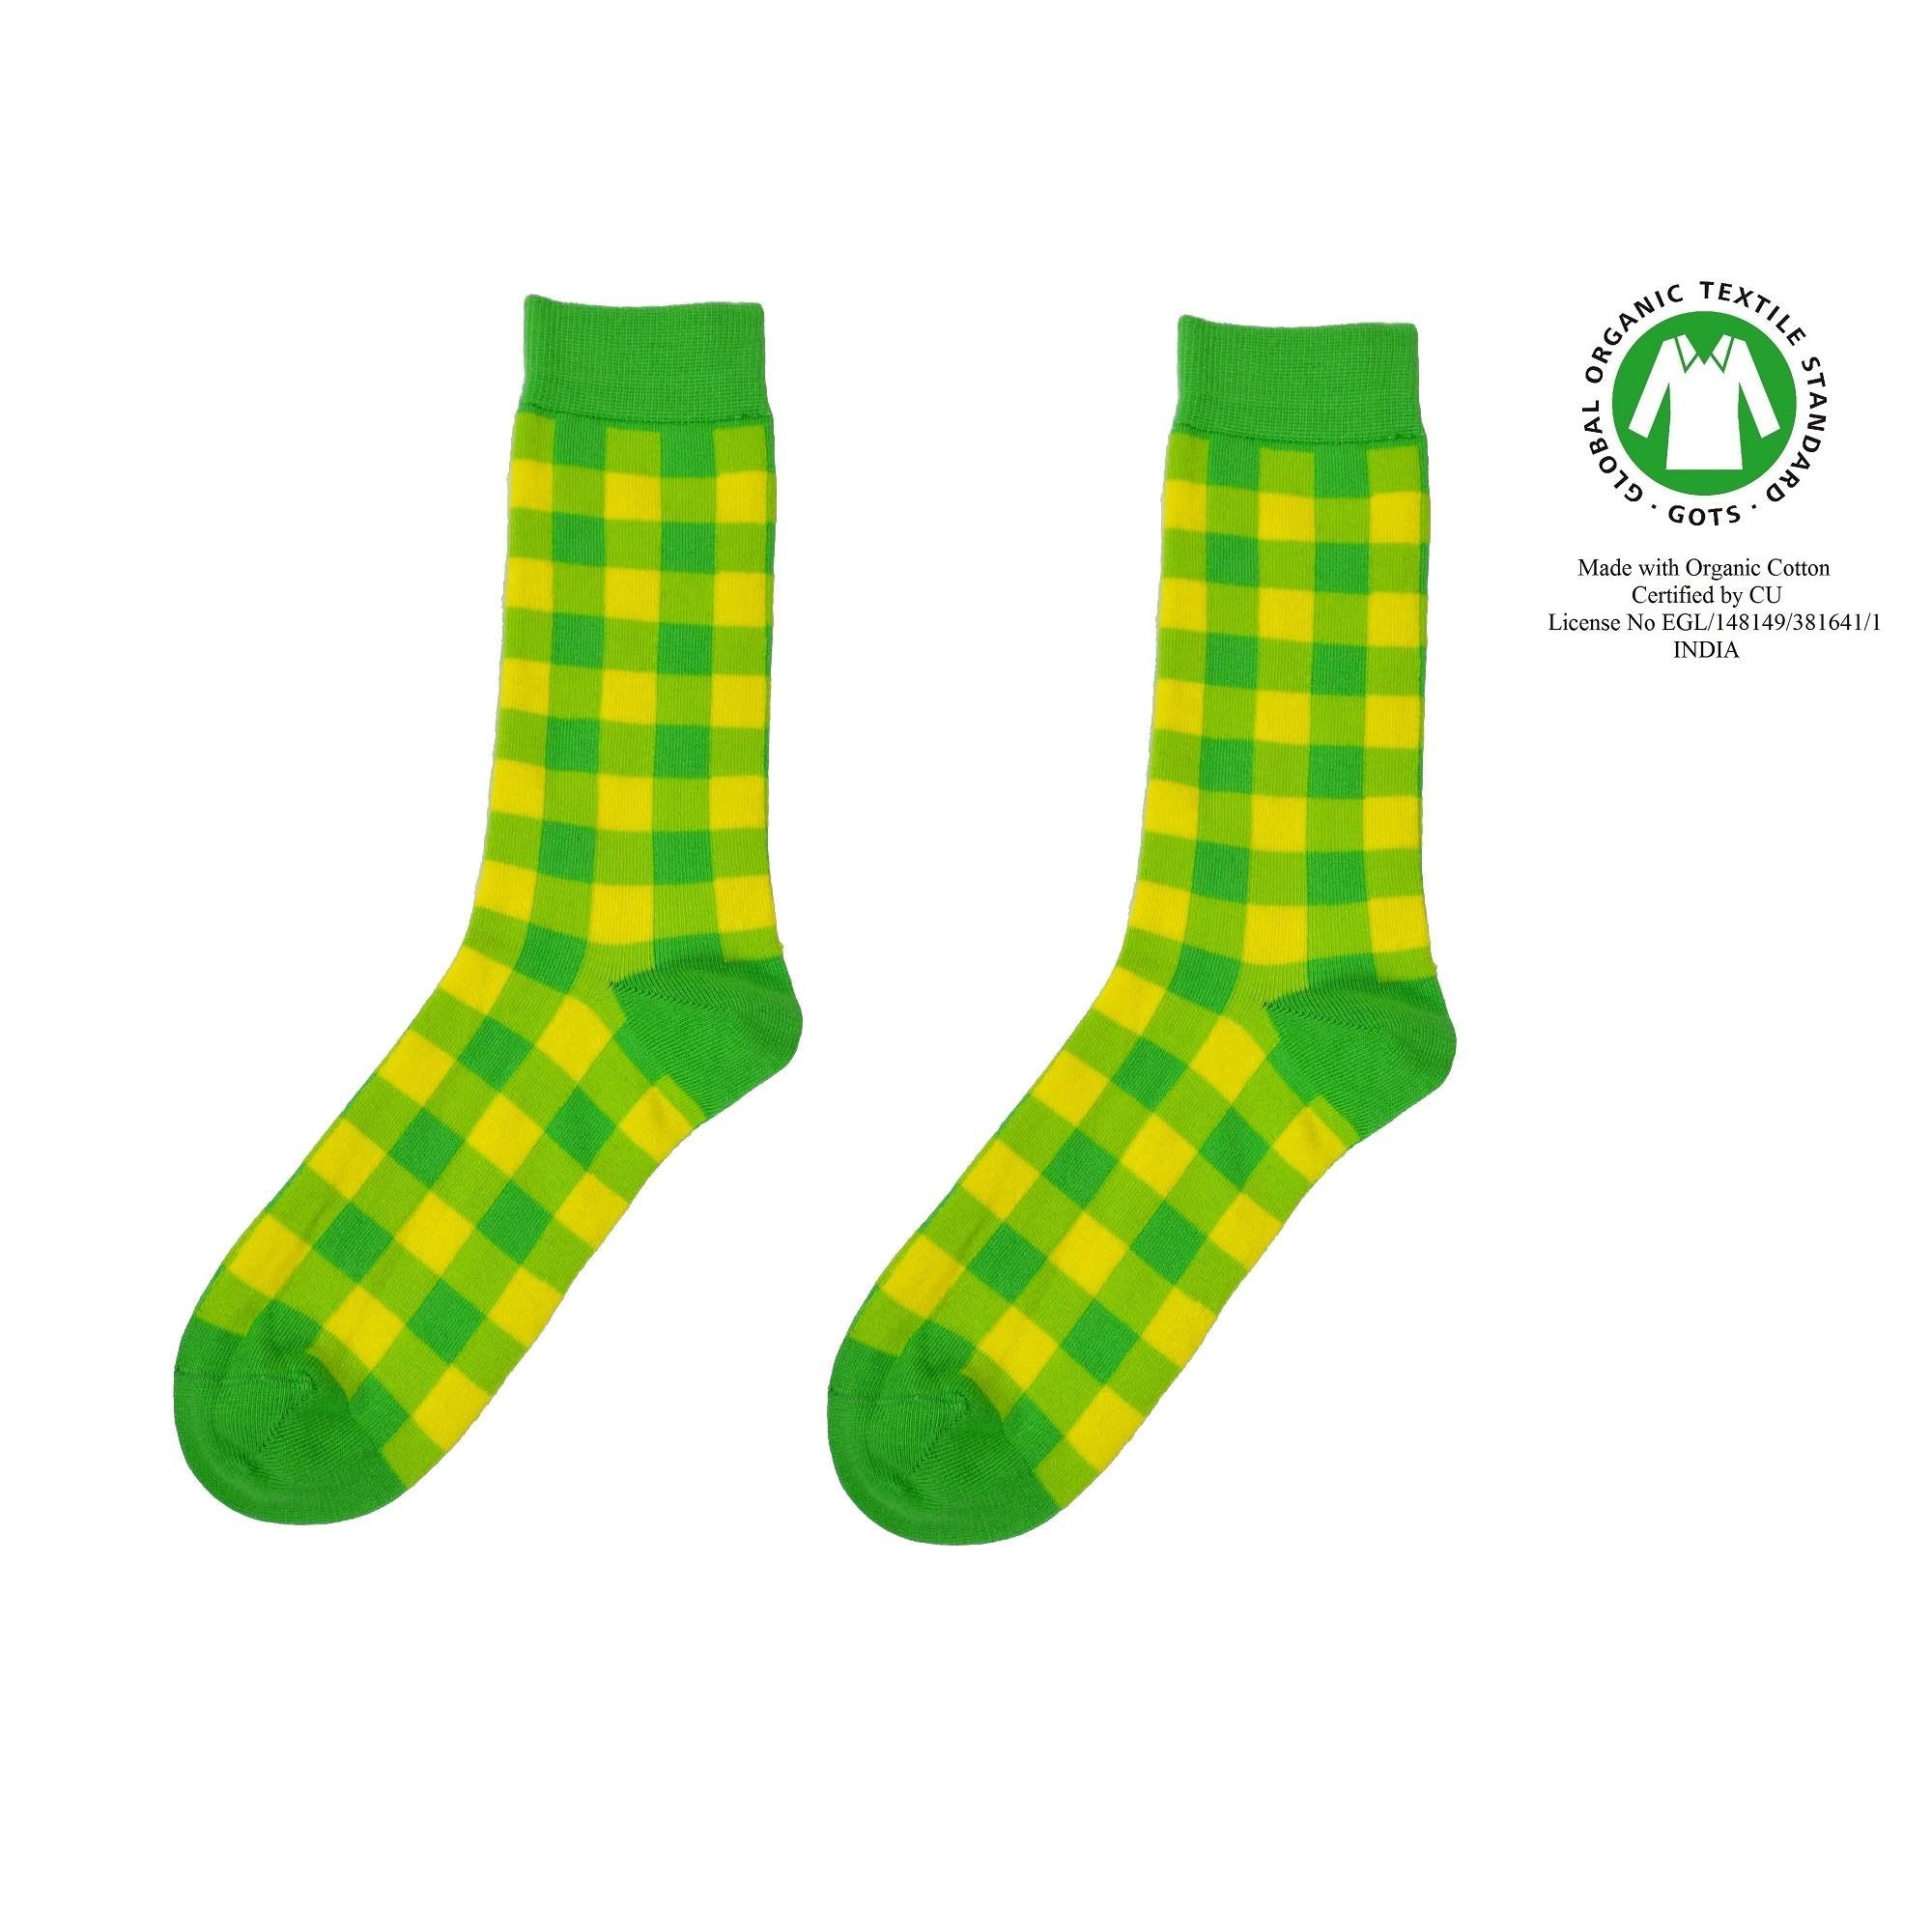 Grönlund sok - Organic socks of Sweden